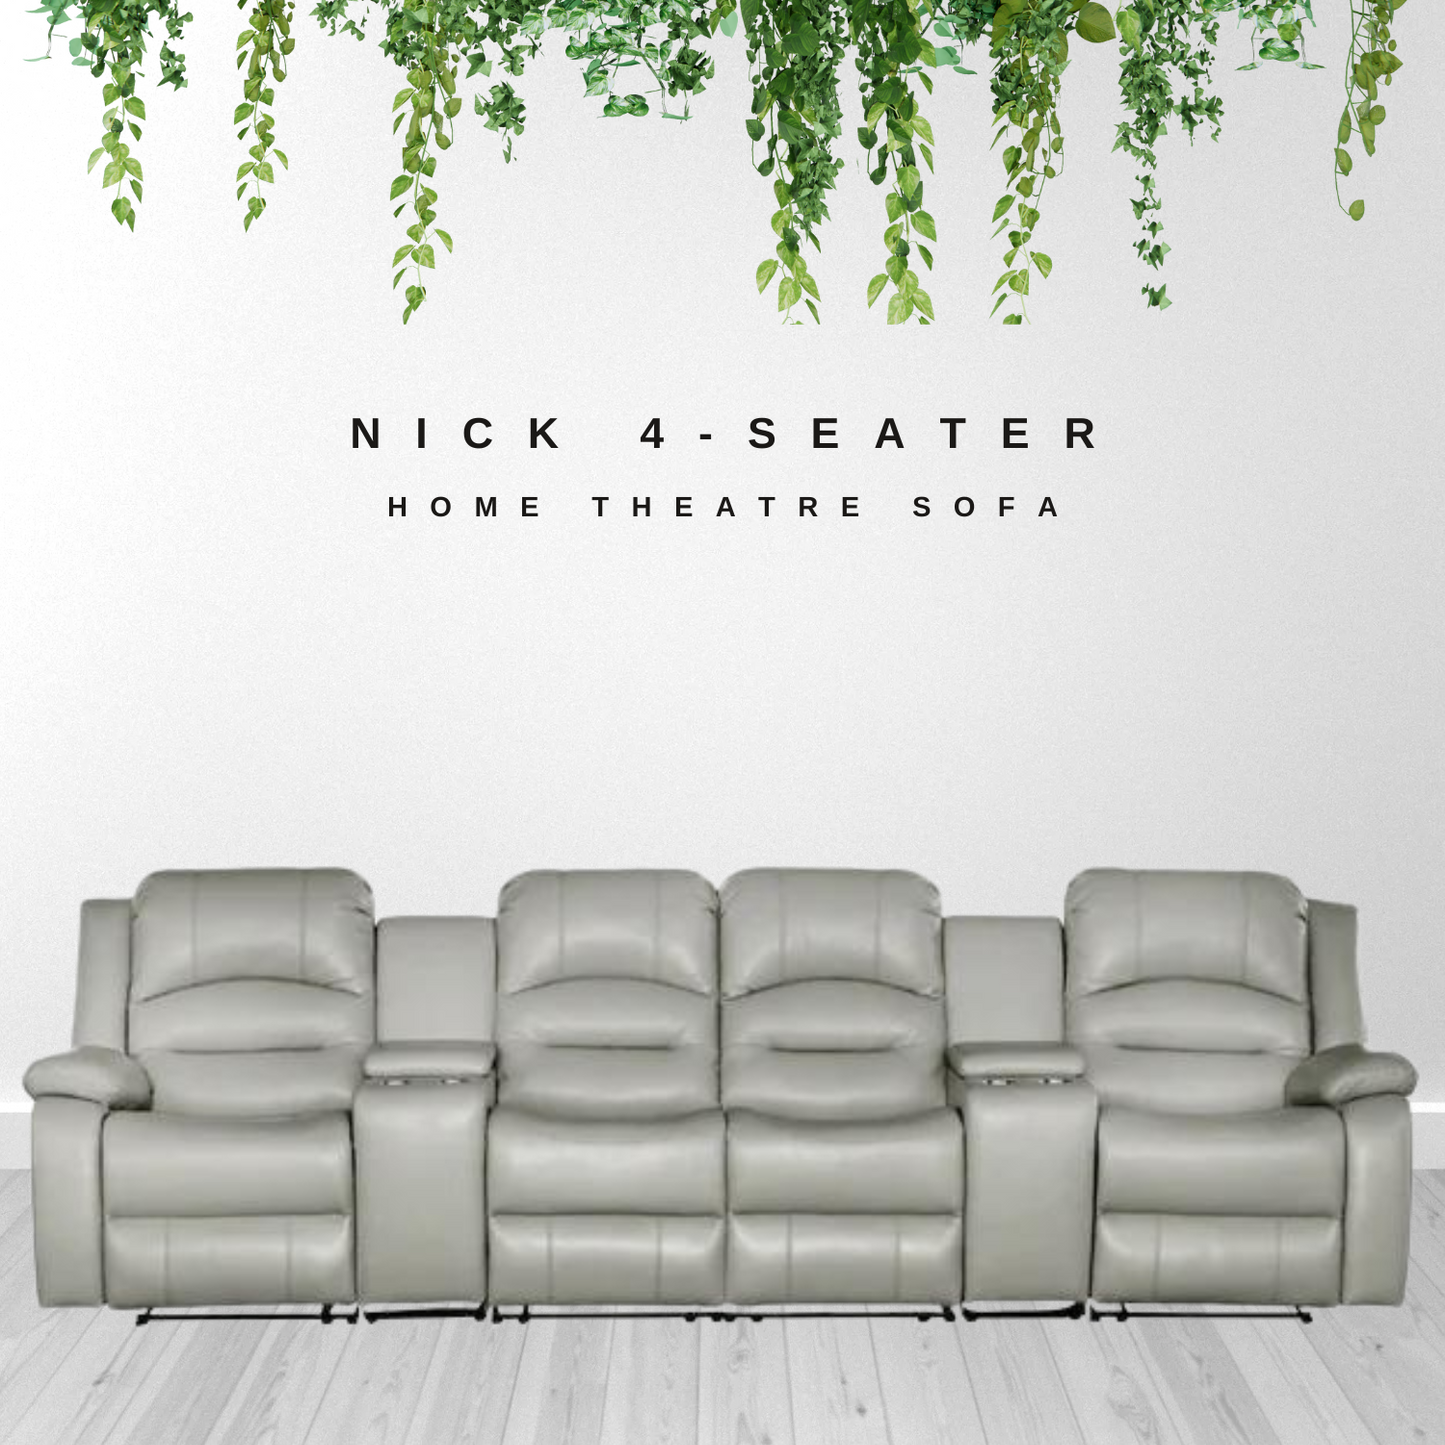 Nick 4-Seater Home Theatre Sofa